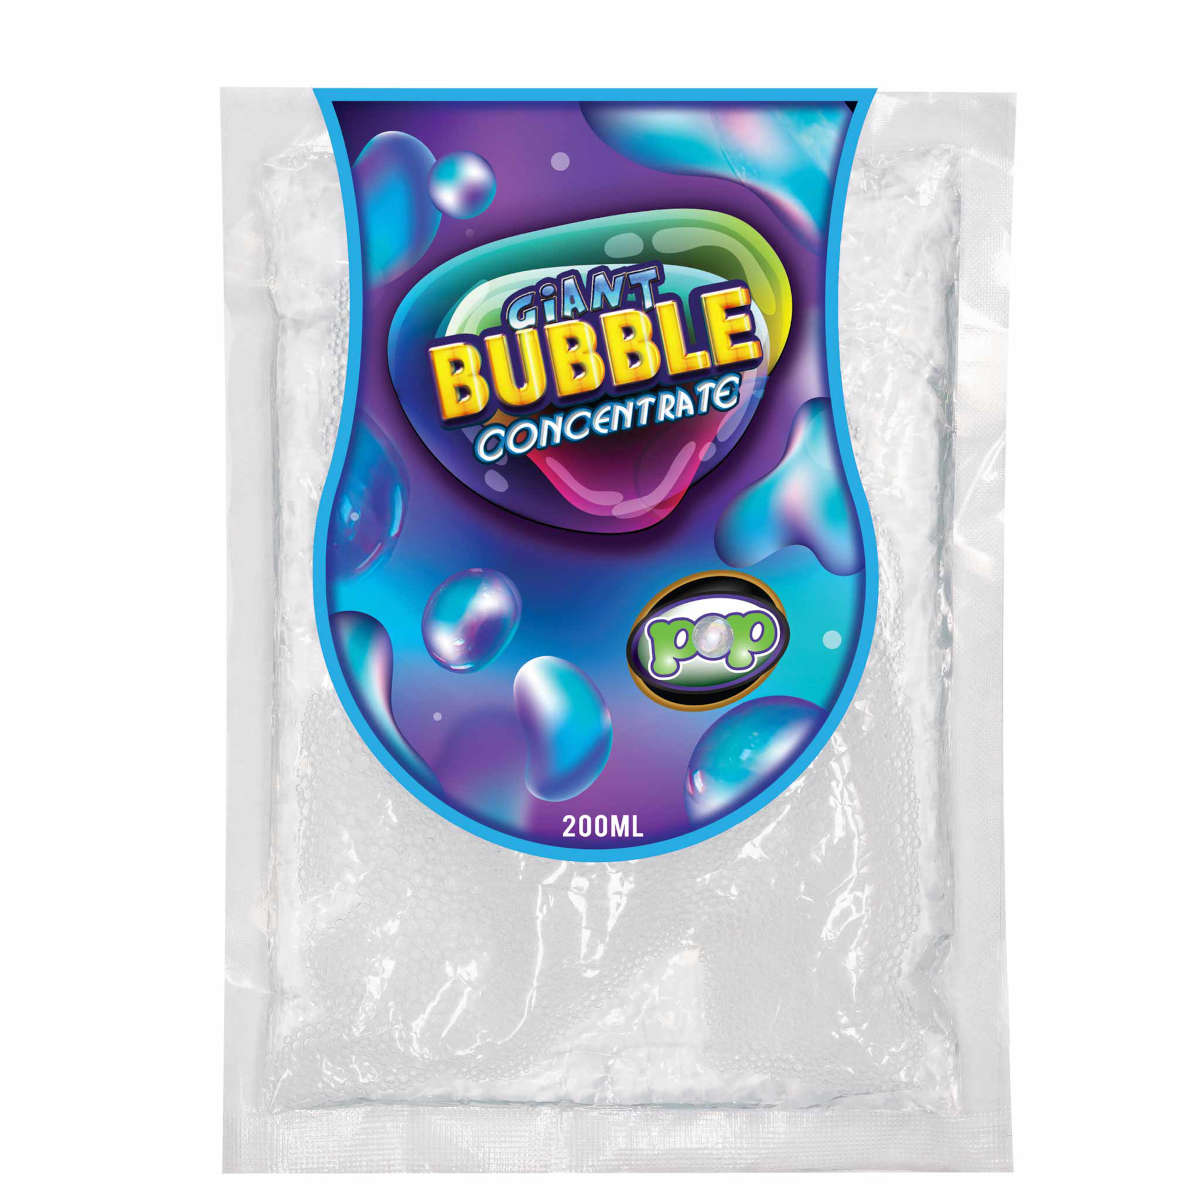 Heebie Jeebies Giant Bubble Concentrate Refill